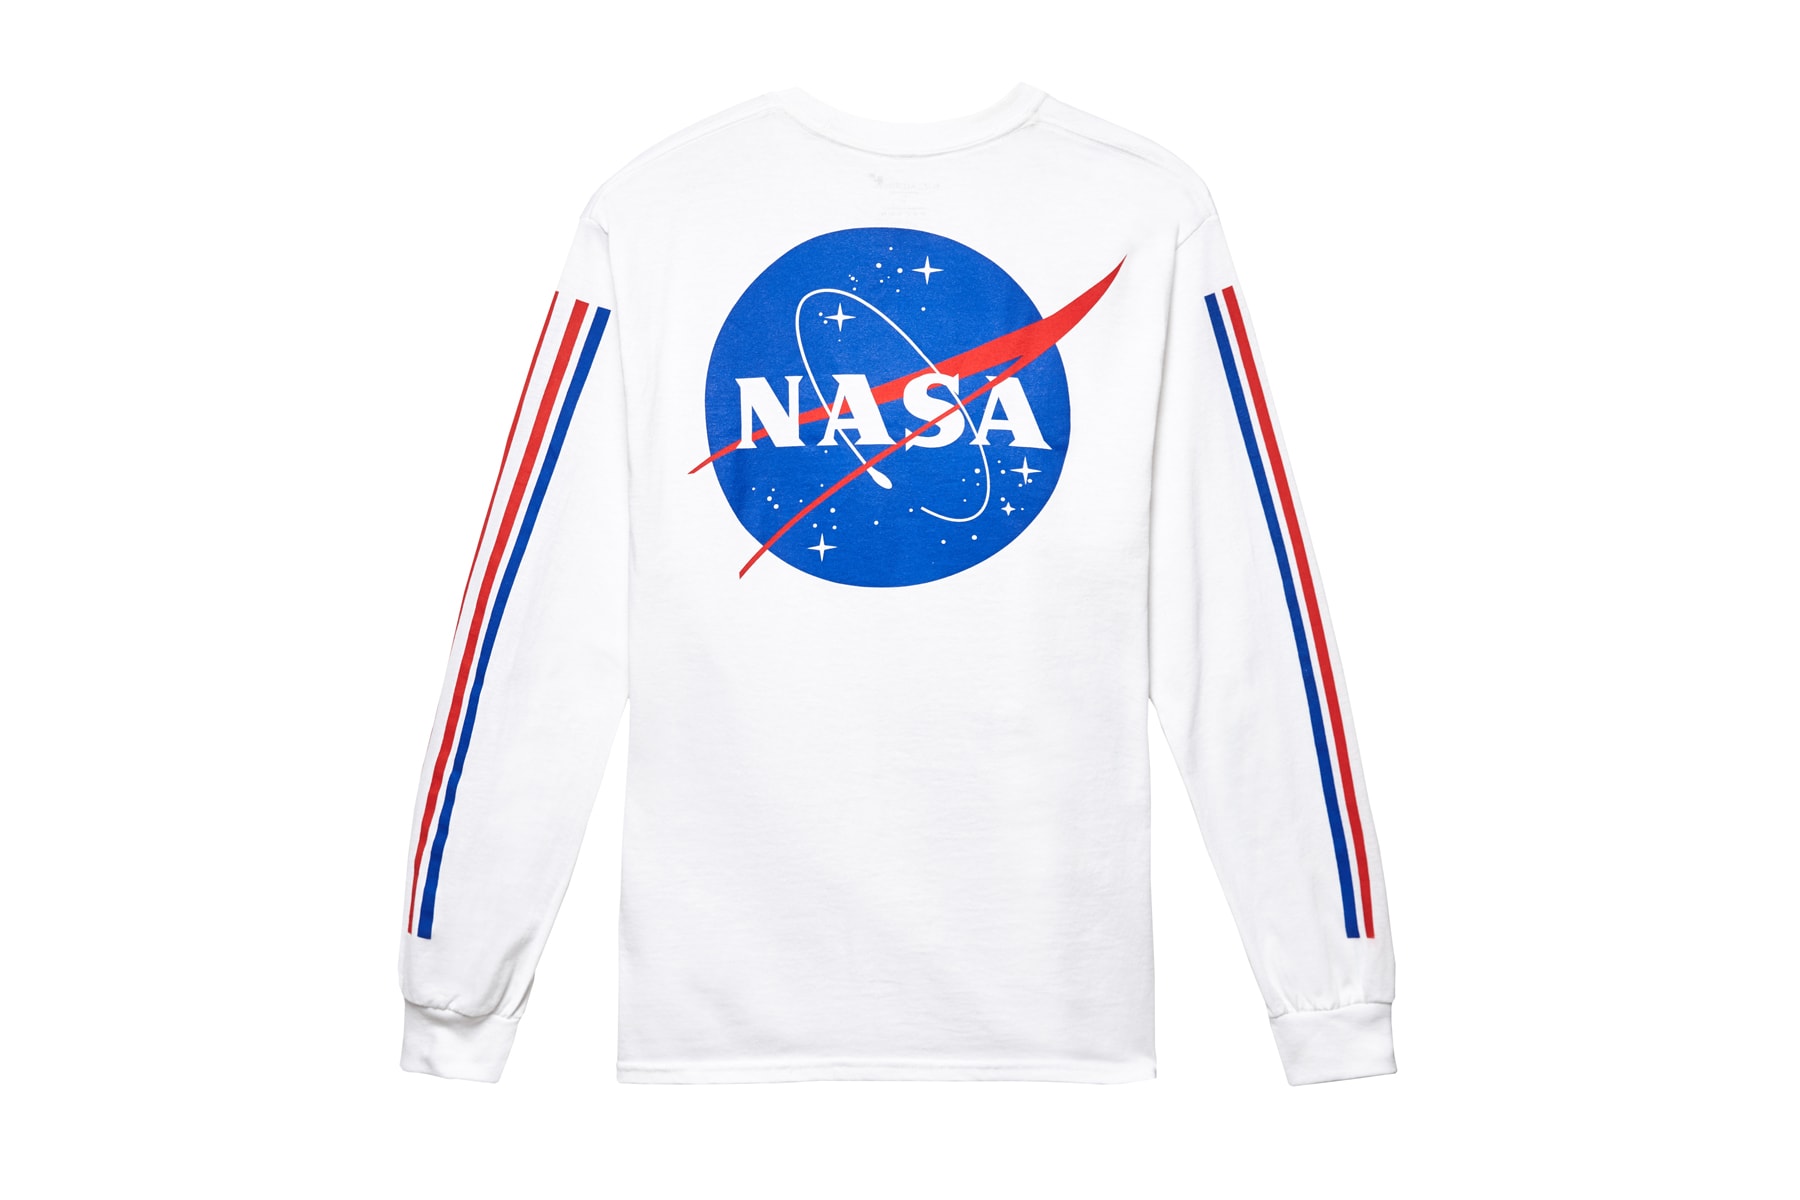 NASA PacSun Holiday Capsule lookbook Buzz Aldrin Foundation Hoodies MA-1 flight bomber jacket t-shirts